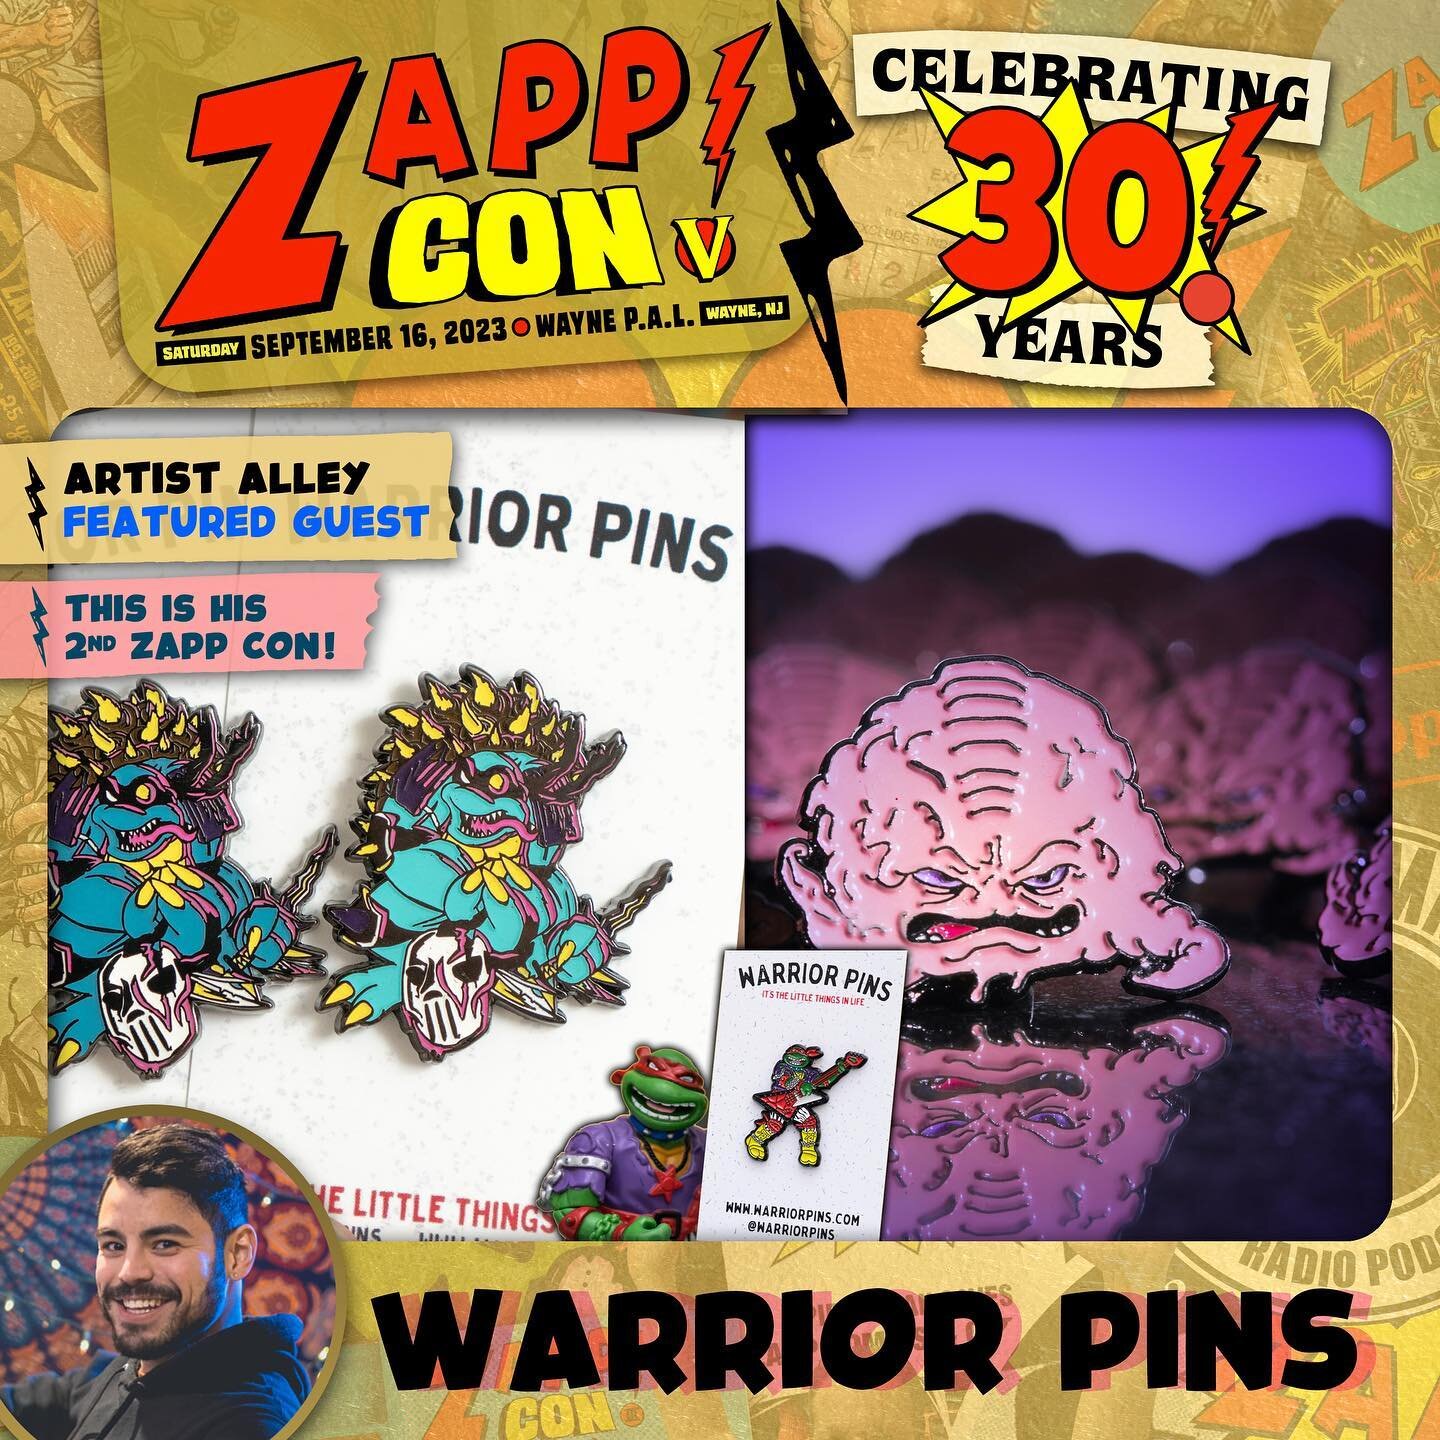 The mighty @warriorpins is bringing his turtley awesome pins to Zapp Con 5!

#zappcon5 #zappcomics #zappconnj #njcomiccon #waynenj #njevents #dc #marvel #artistalley #tmnt #pins #tmntpins #pizza